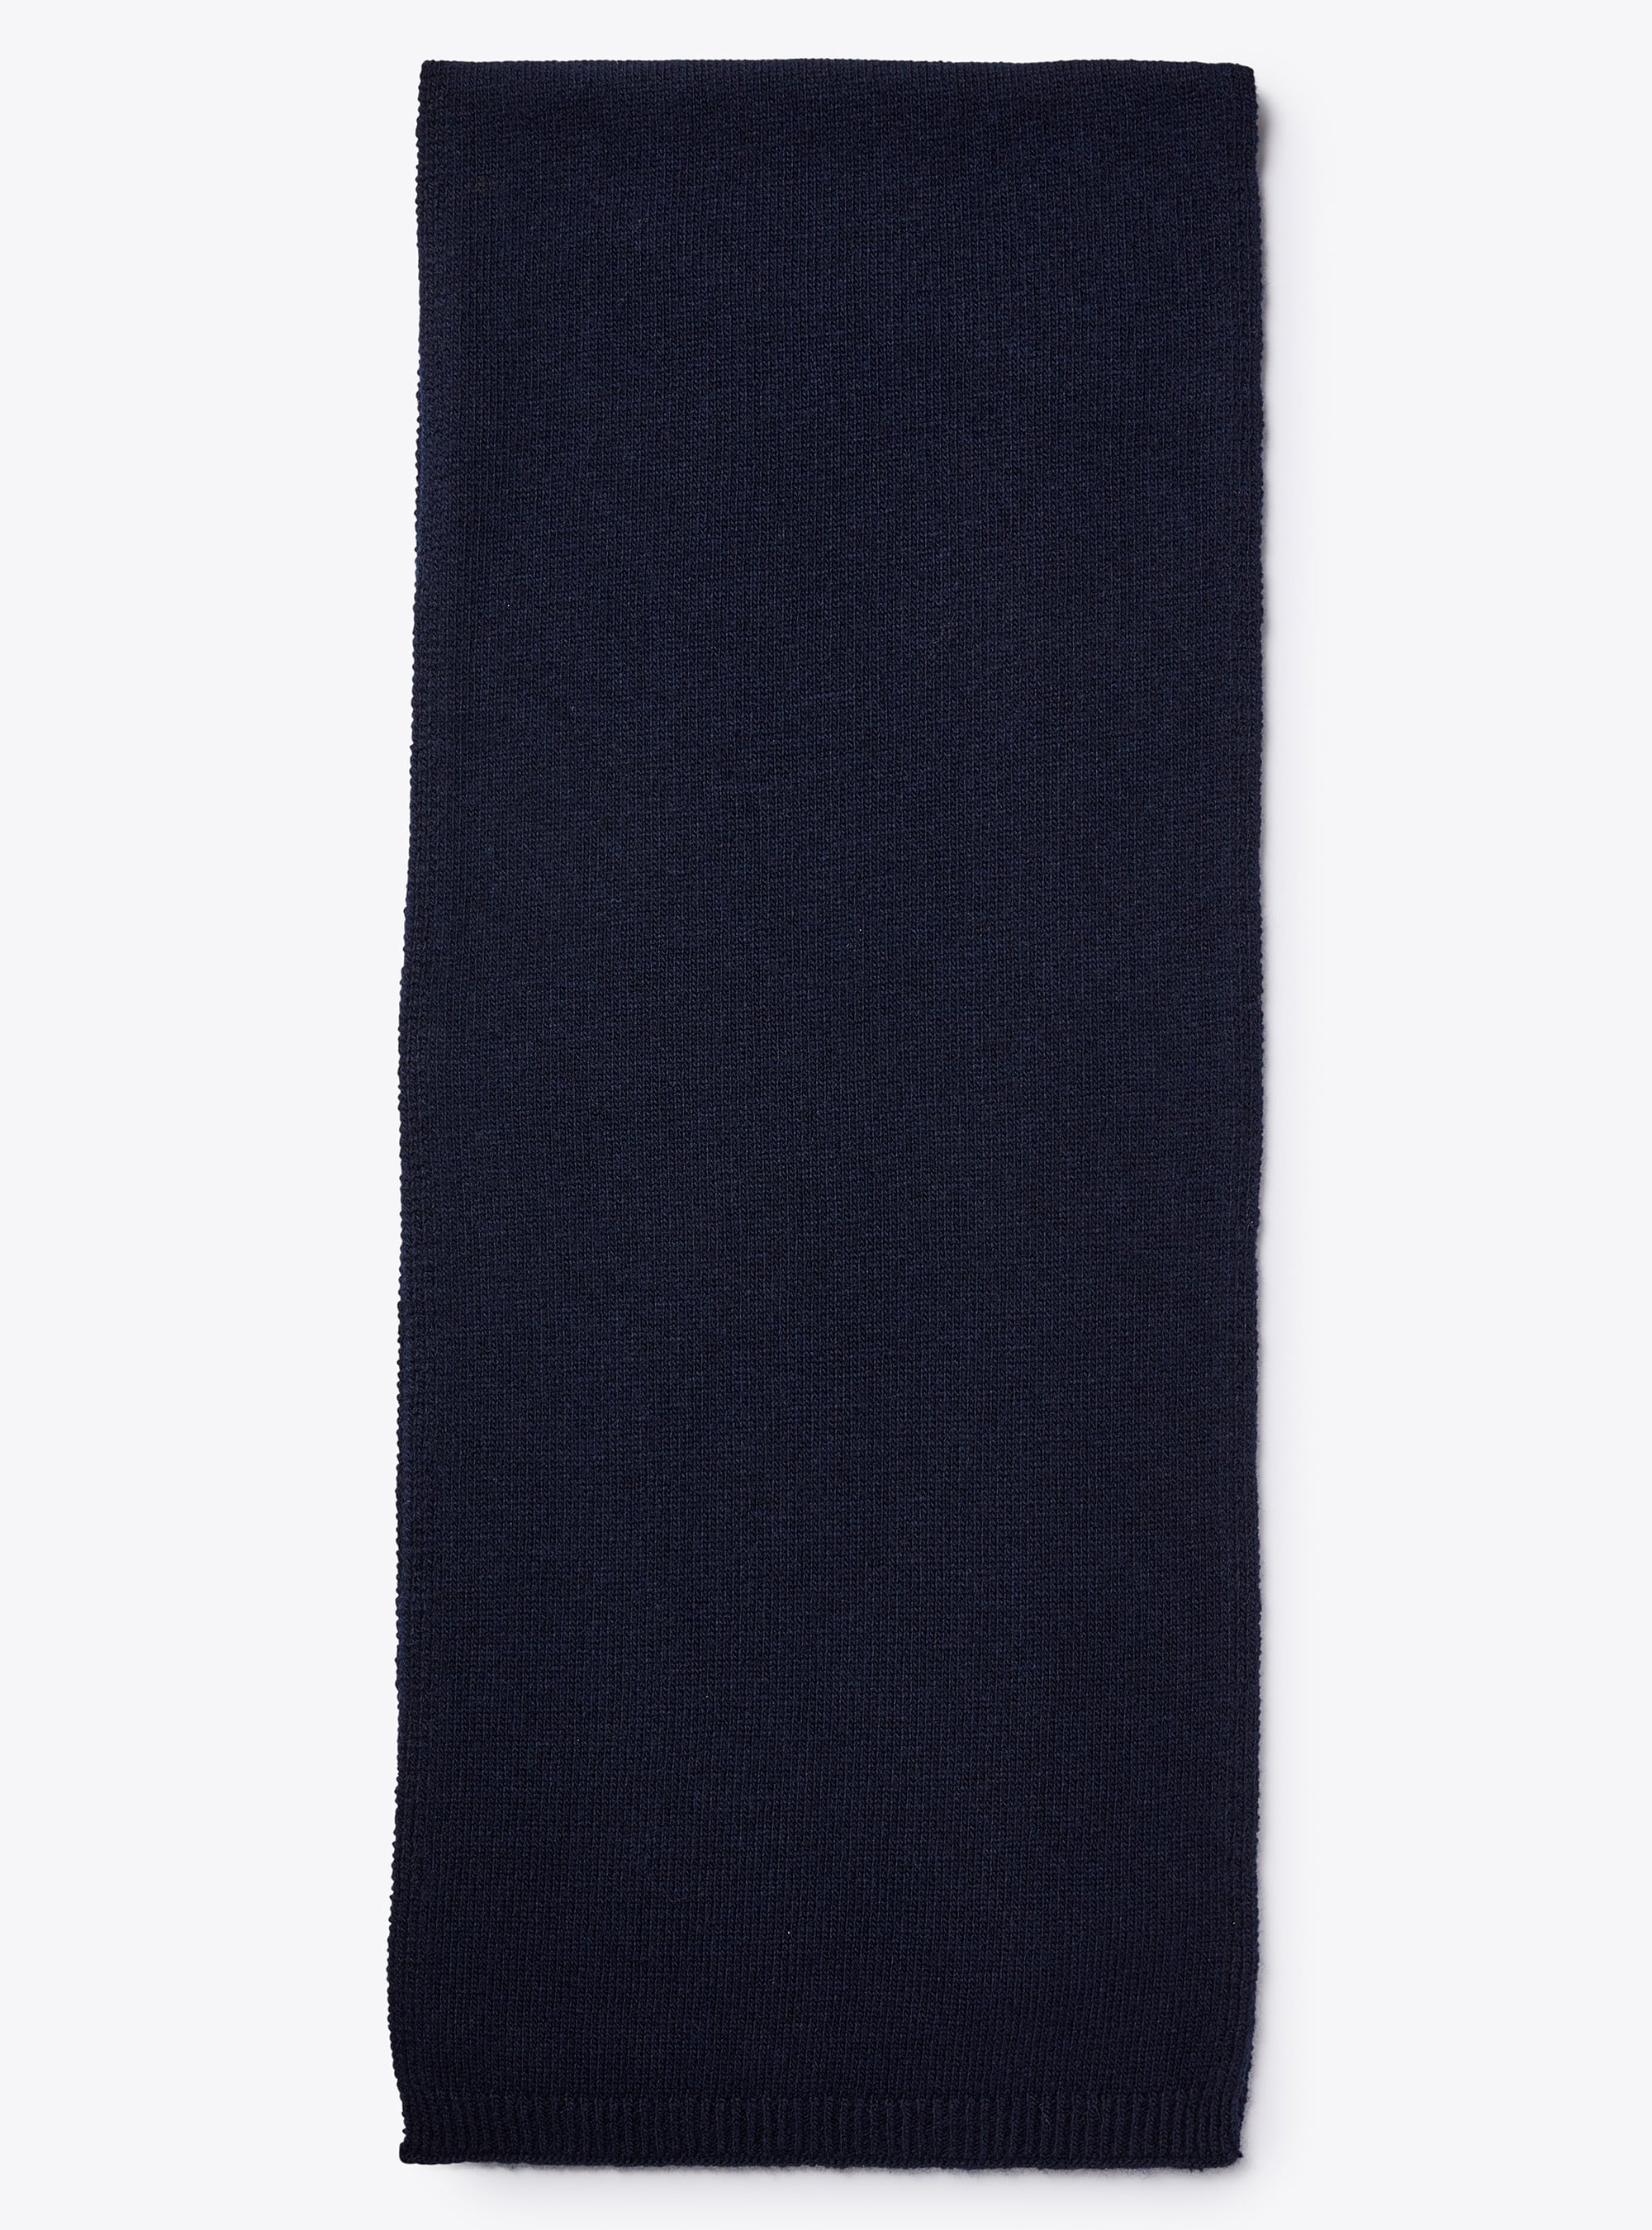 Navy merino wool scarf - Accessories - Il Gufo